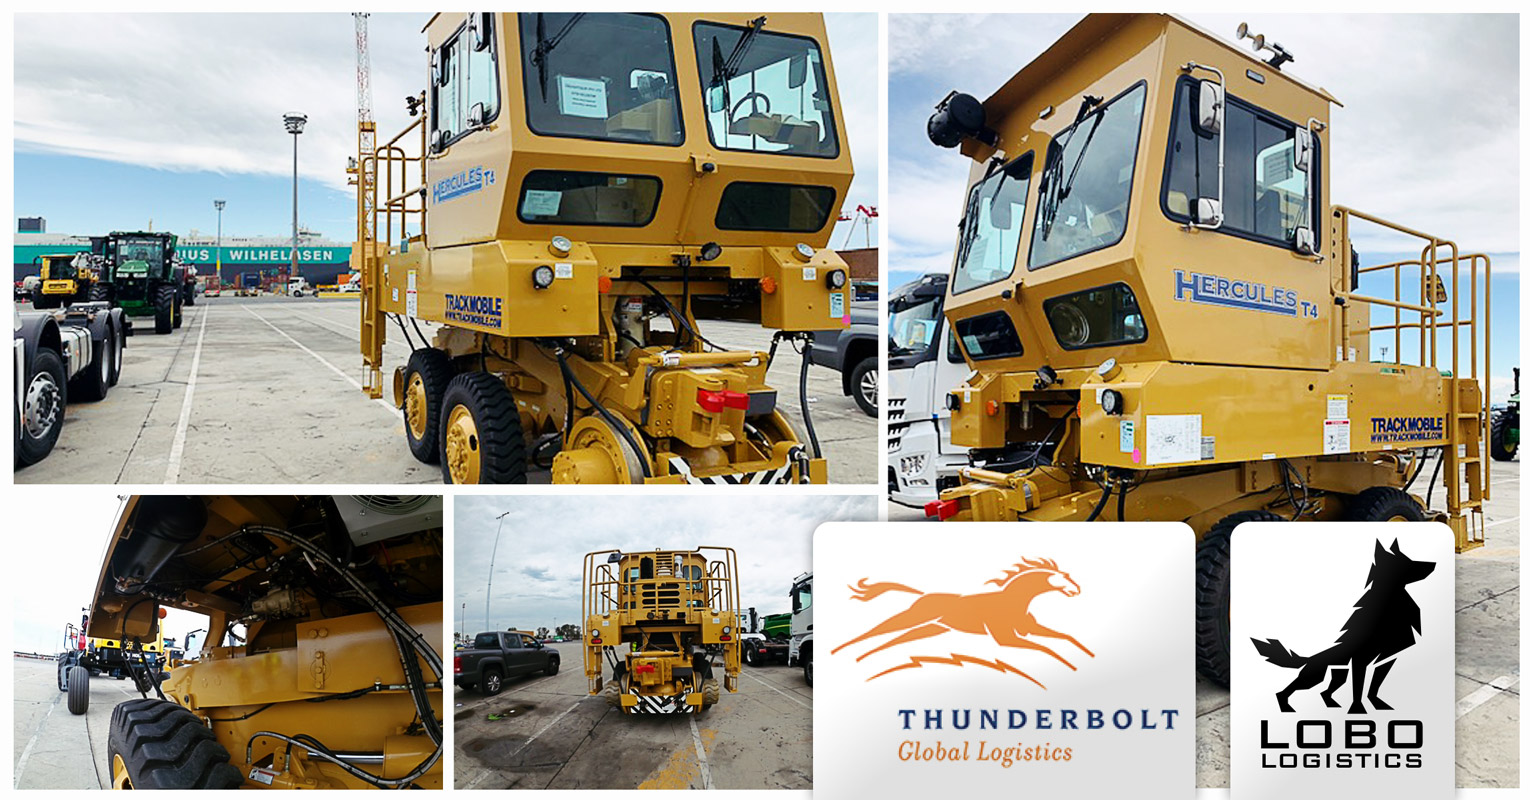 Lobo Logistics and Thunderbolt Global Logistics cooperated on the transport of Port Handling Equipment for Brisbane Port